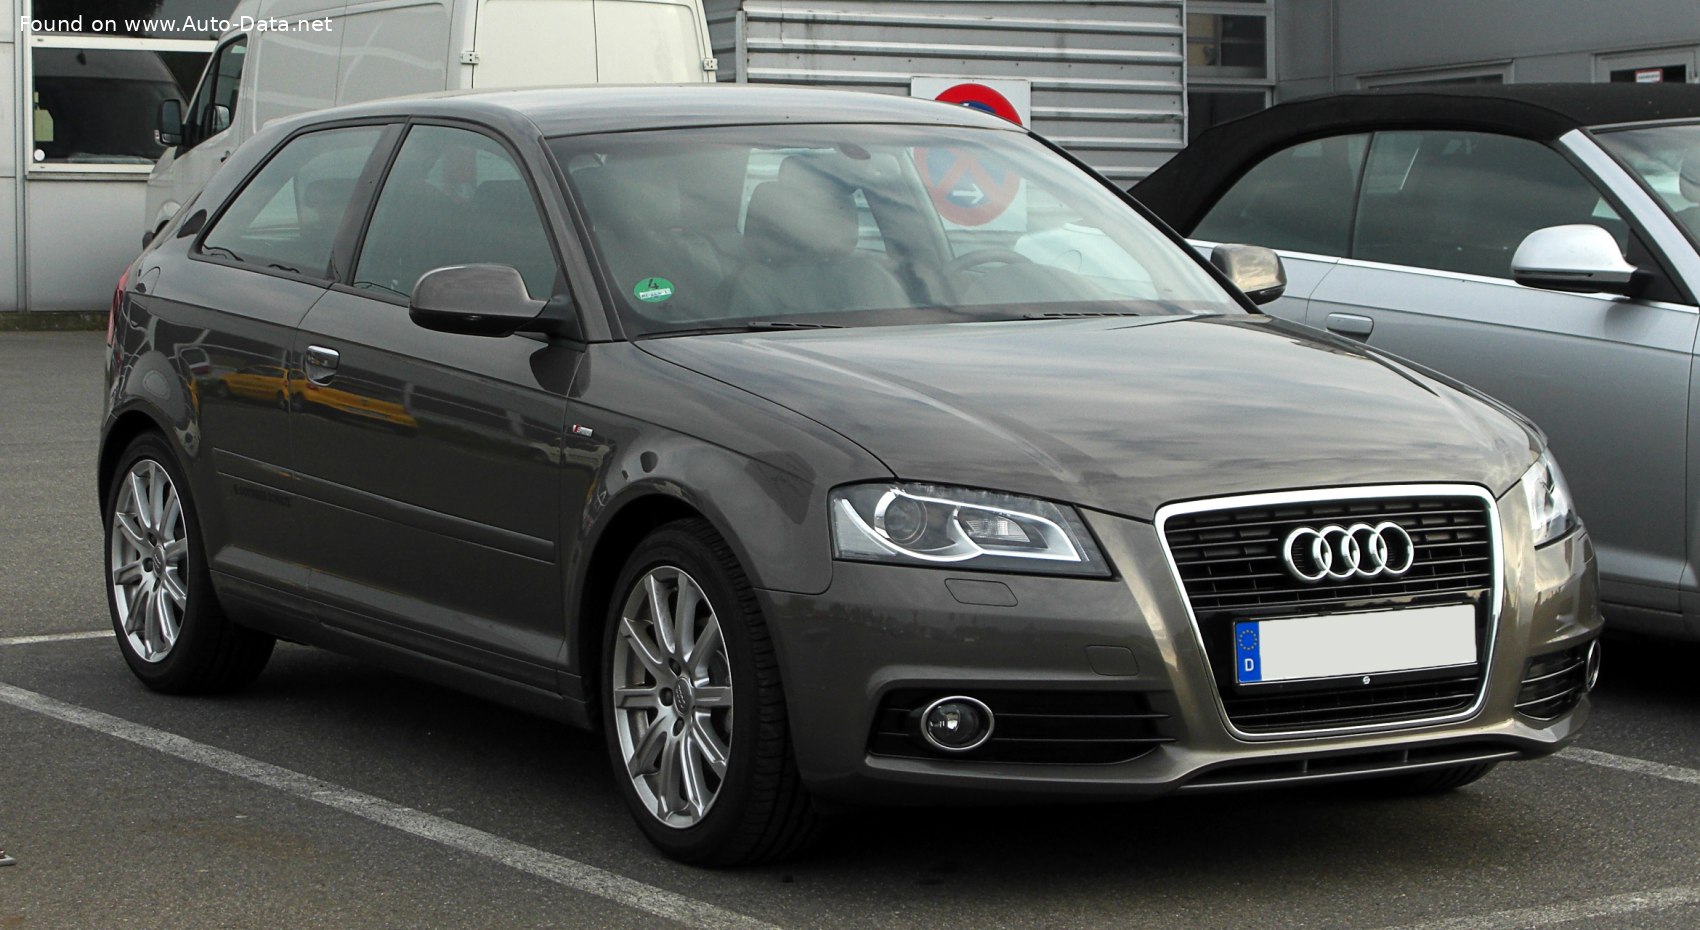 https://www.auto-data.net/images/f112/Audi-A3-8P-facelift-2008.jpg